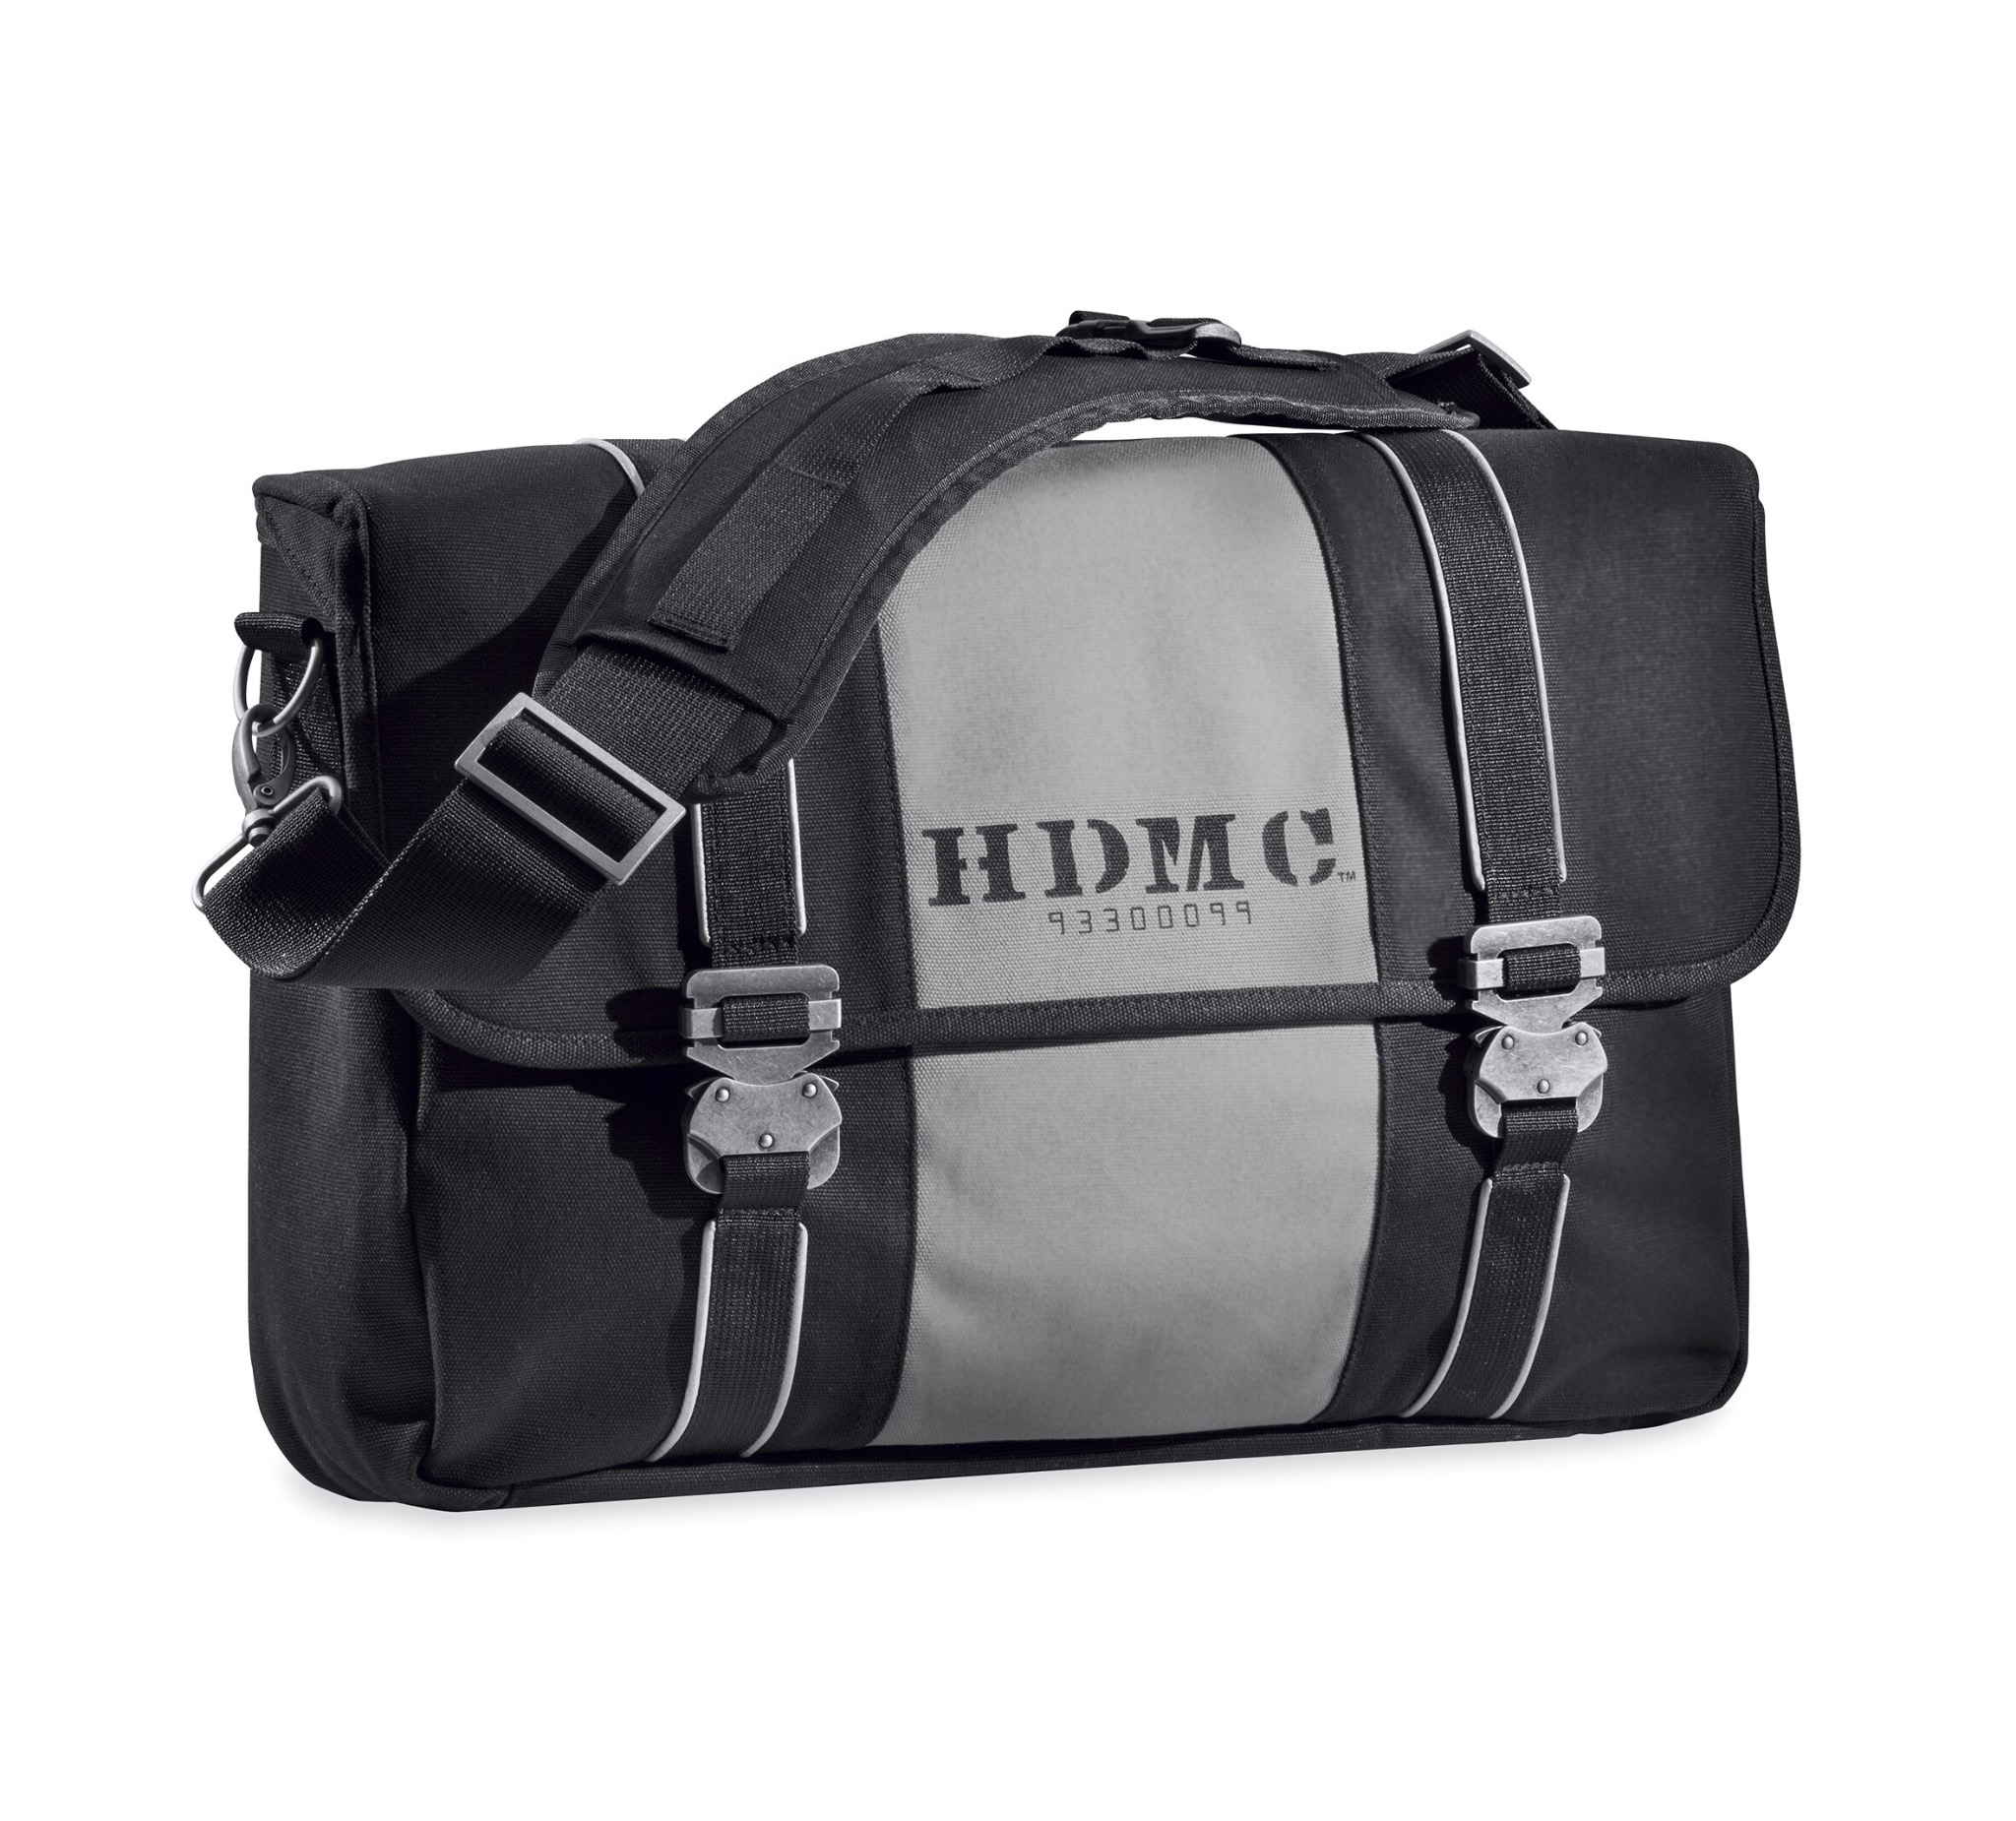 HDMC Messenger Bag - Black/Silver